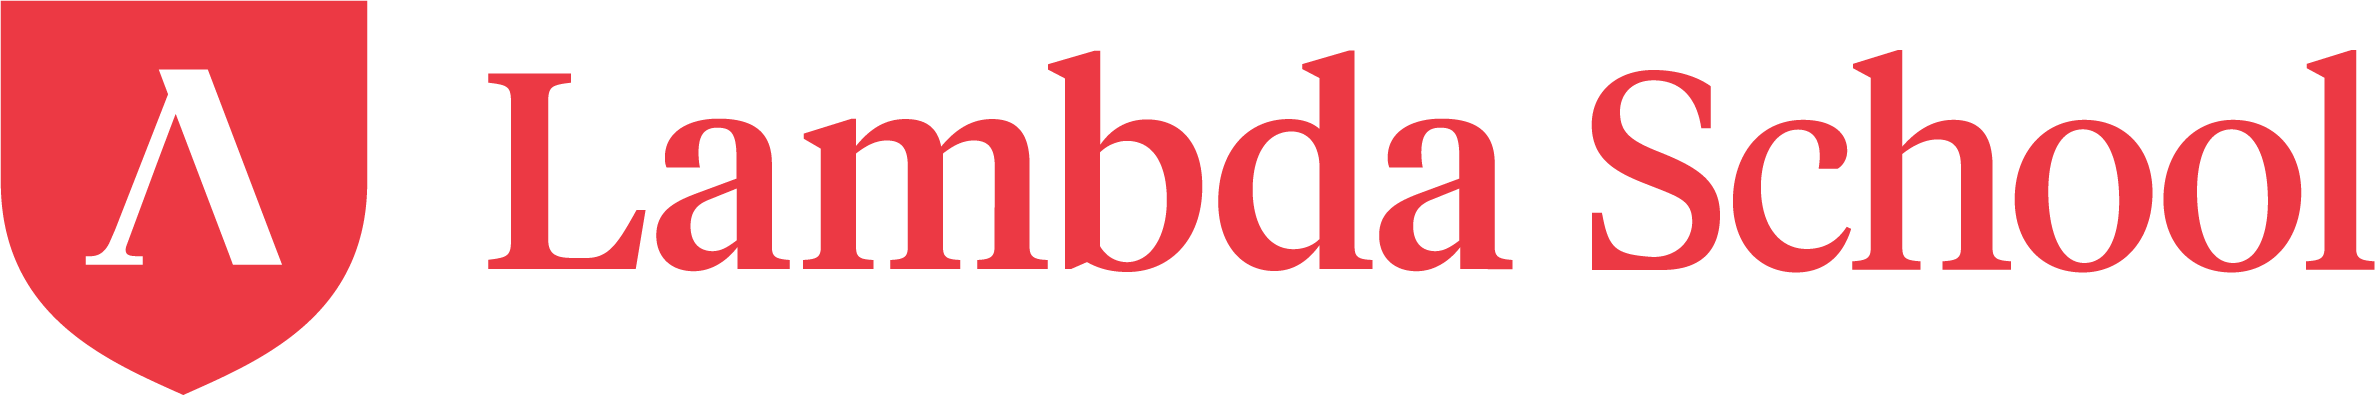 Lambda School Full Stack Web Development Bootcamp logo